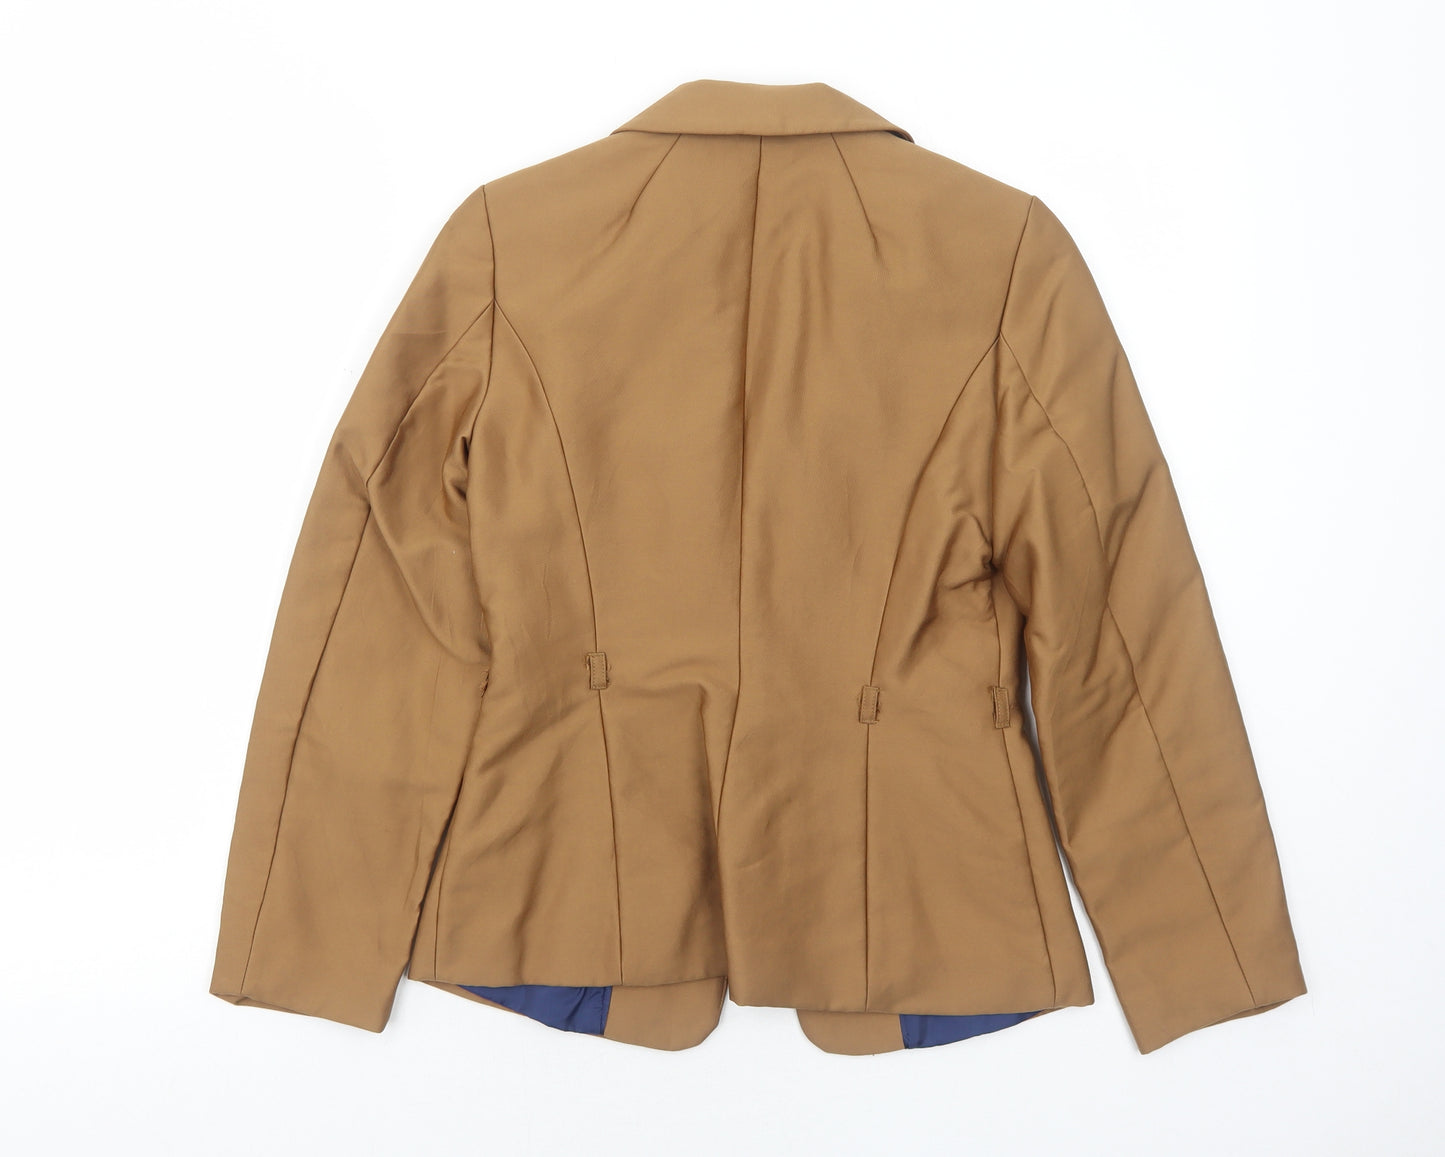 H&M Womens Brown Cotton Jacket Blazer Size 6